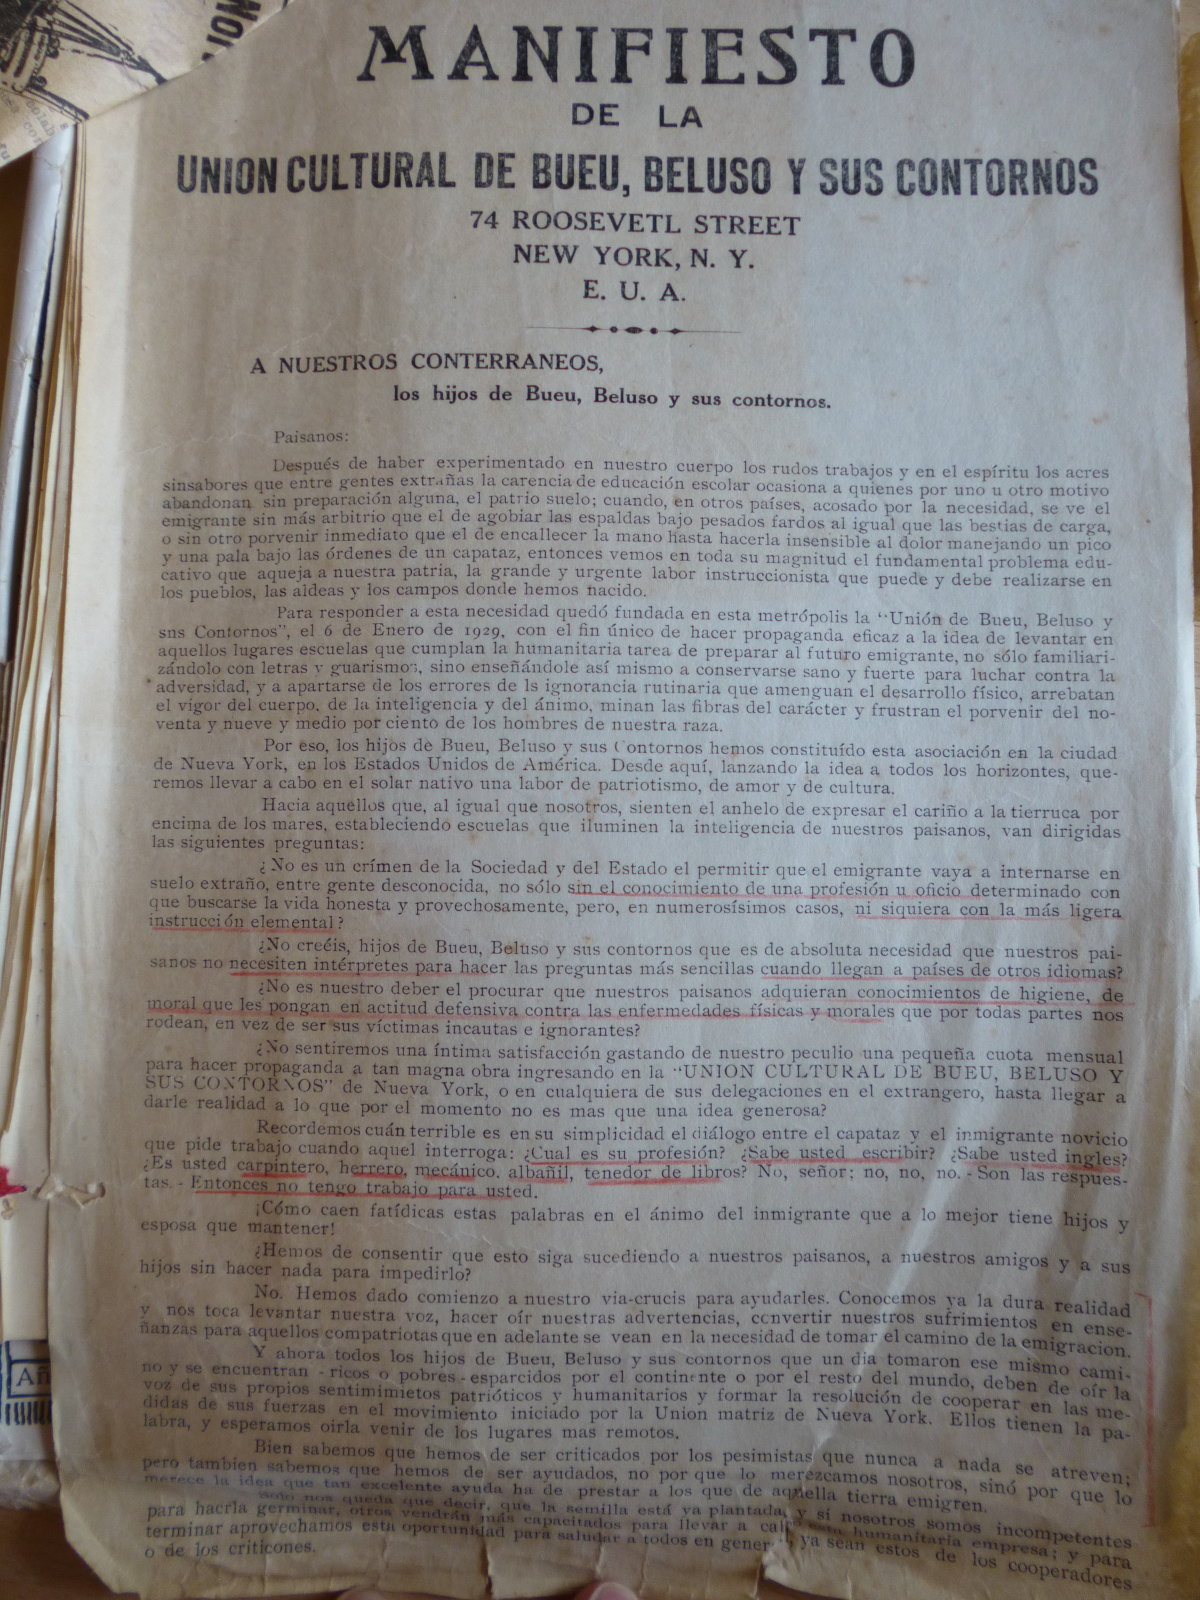 Manifesto of the foundation of the society Bueu, Beluso y sus contornos in New York (1920) (Arquivo Municipal de Bueu)